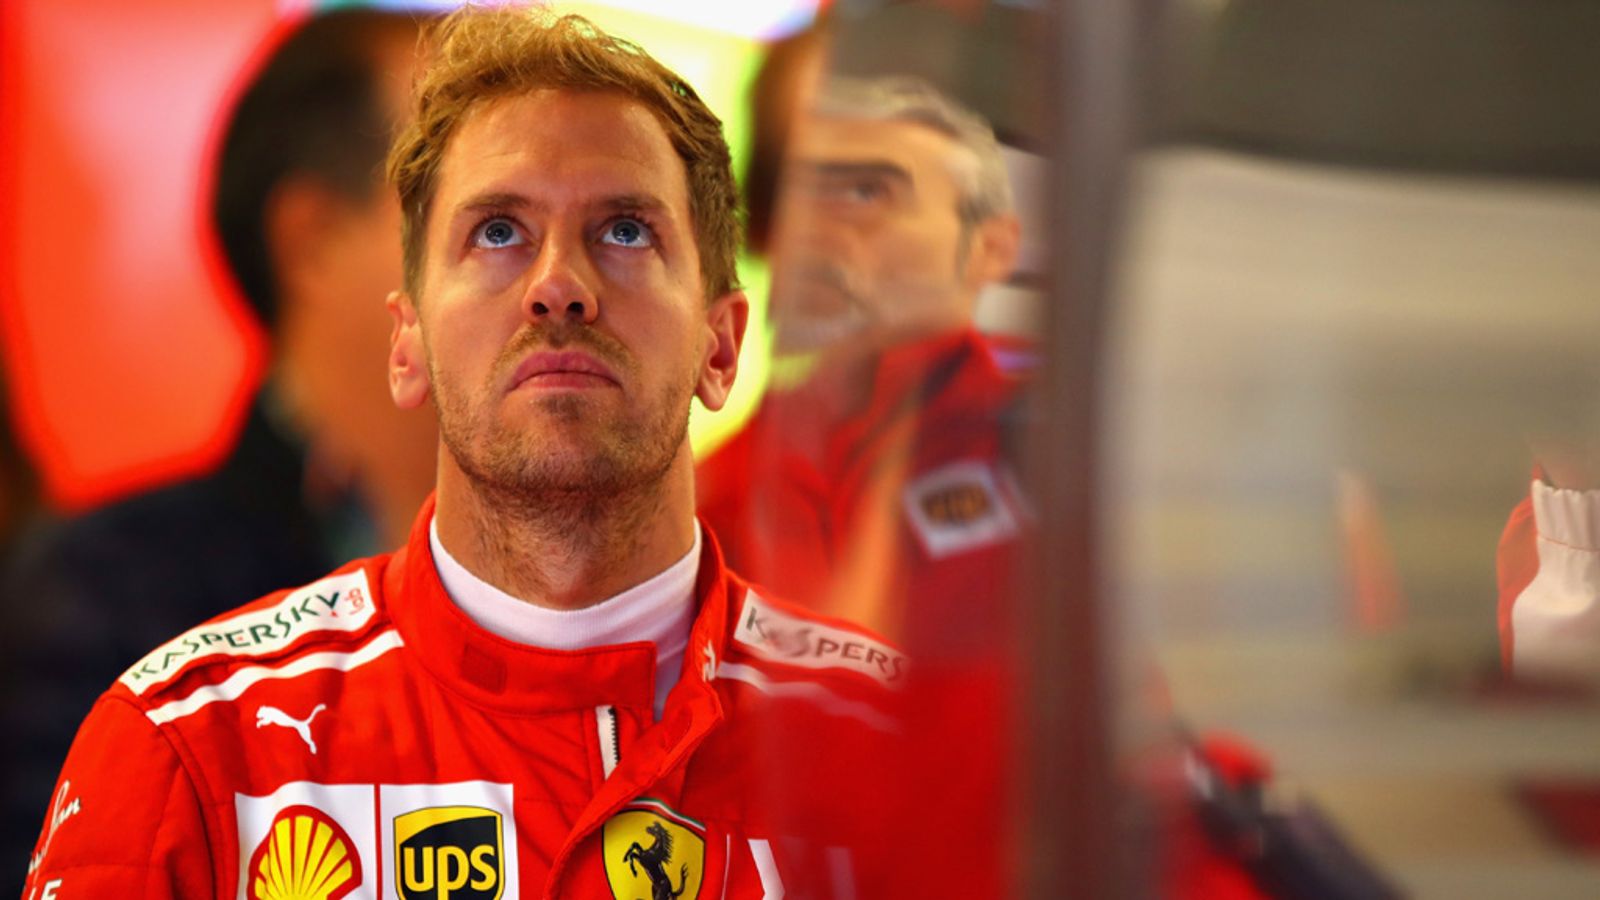 US GP: Sebastian Vettel hit with three-place grid demotion - the right decision? | F1 News